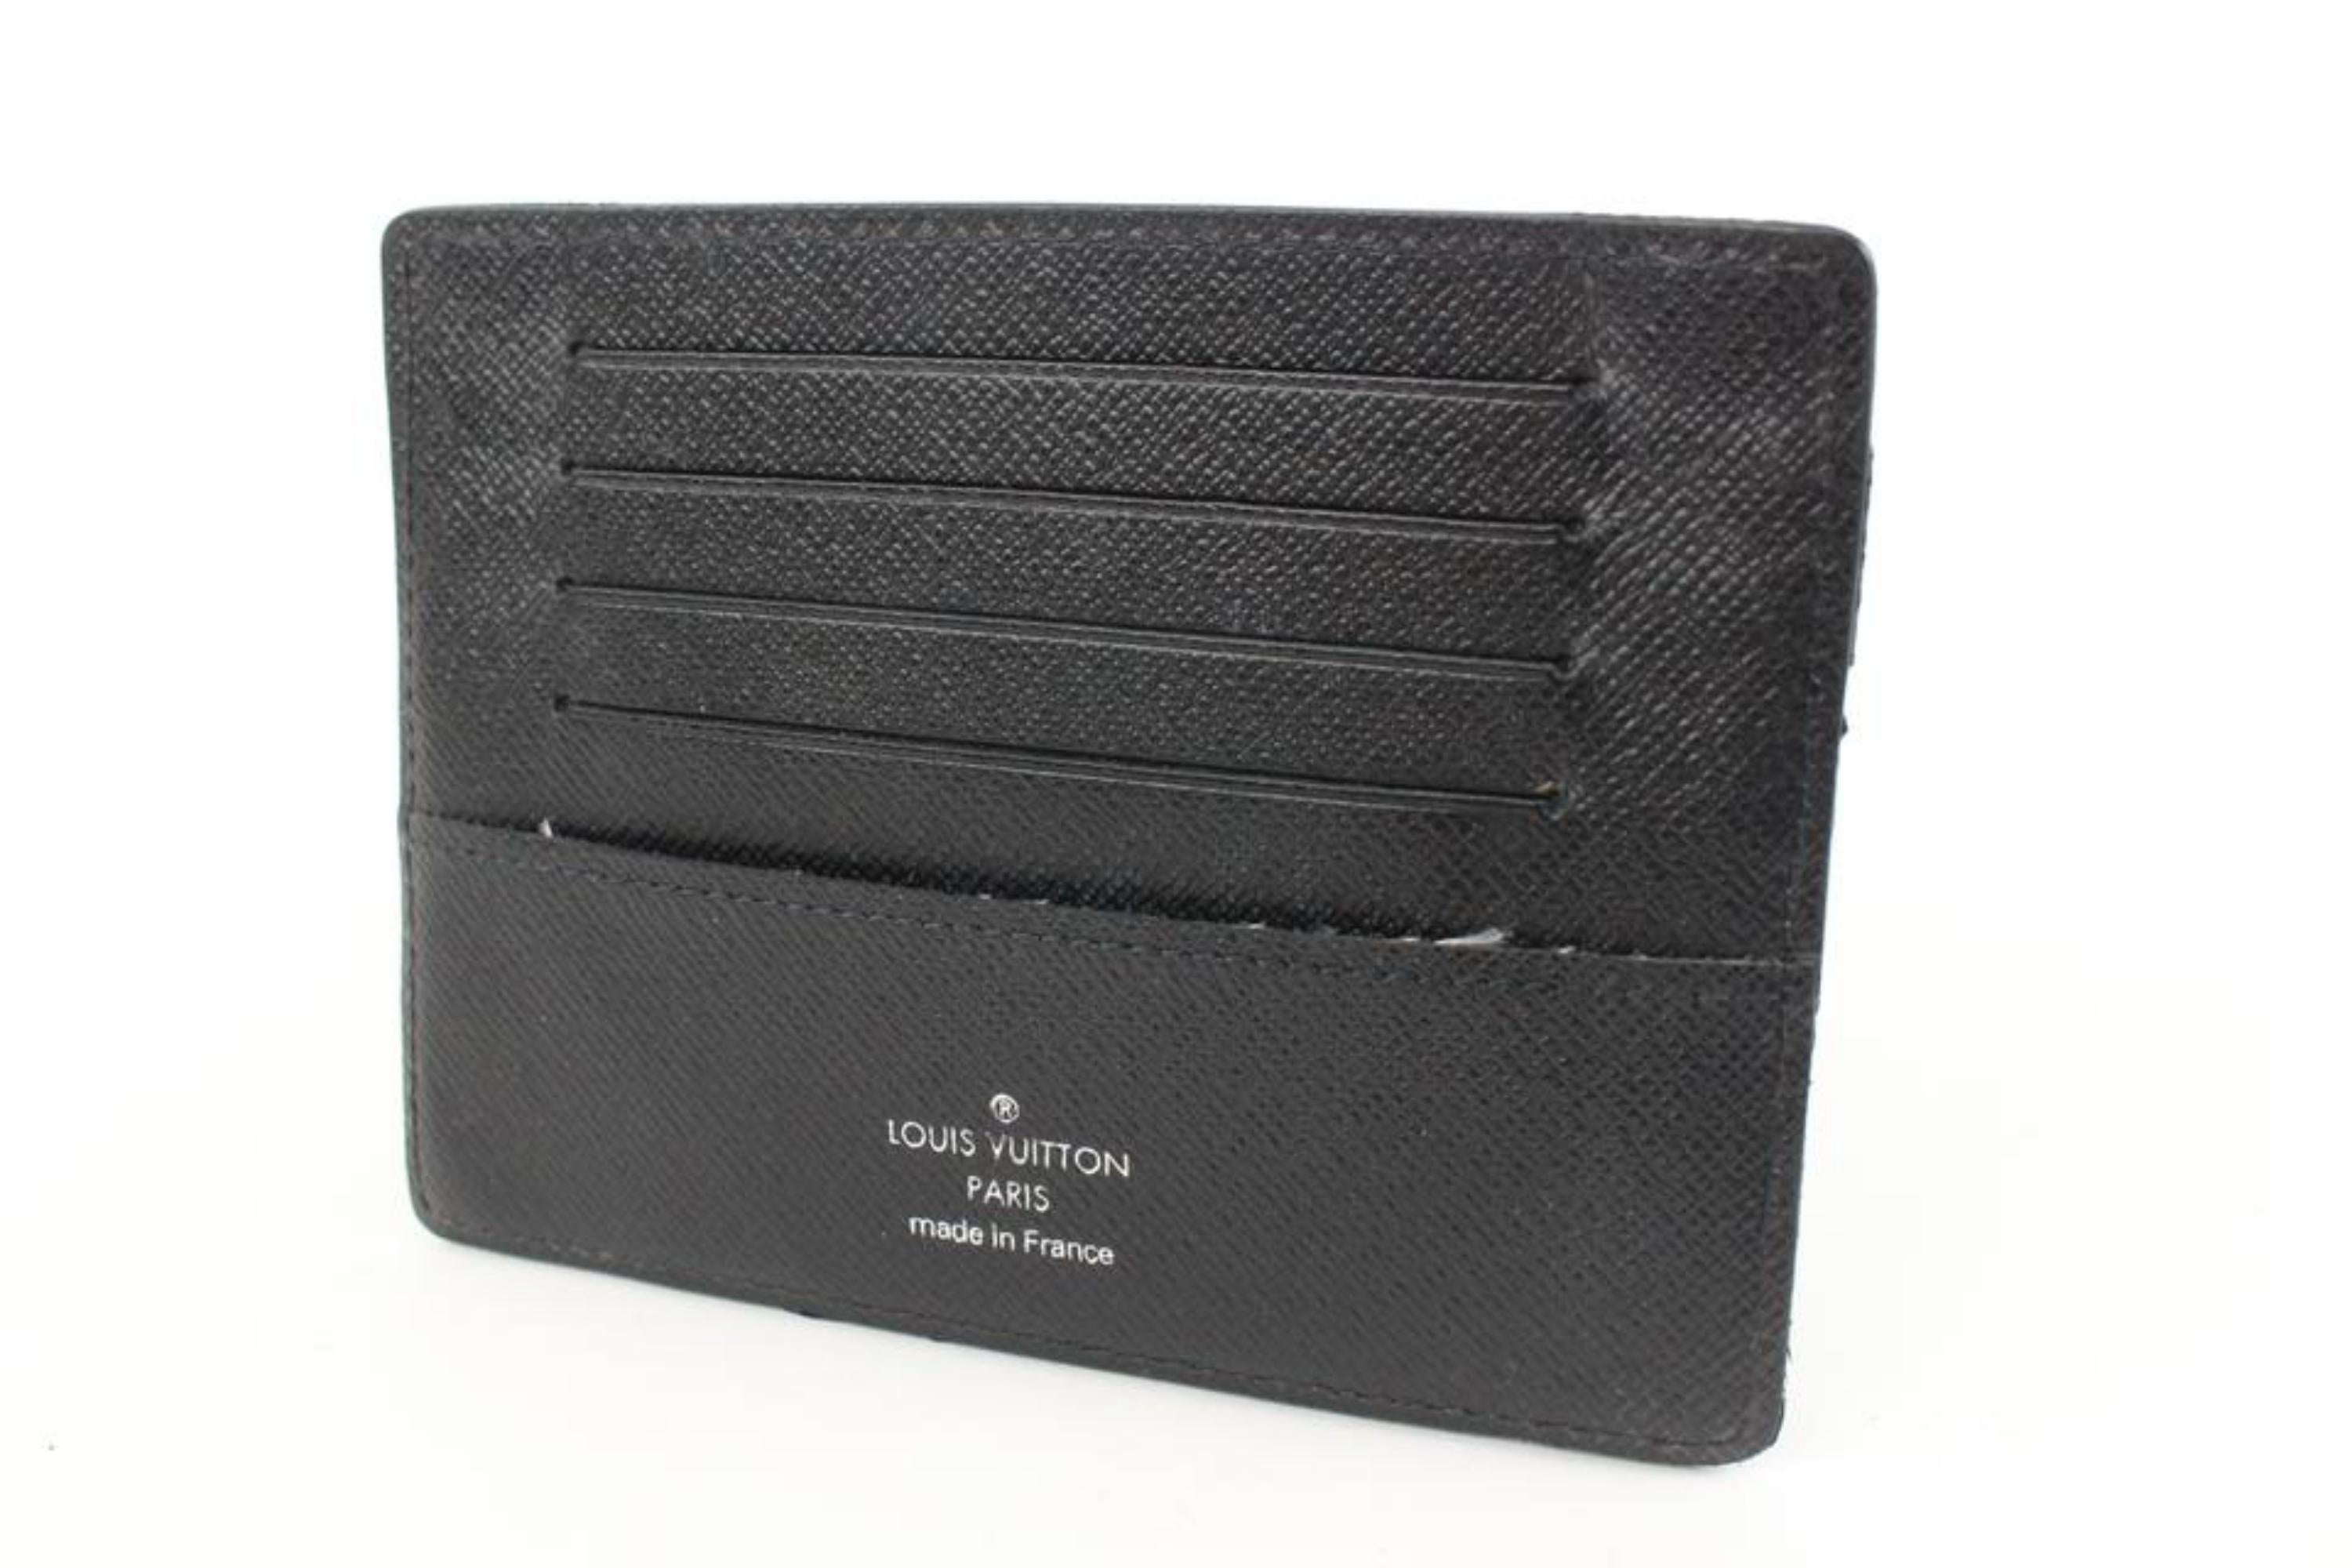 Louis Vuitton Damier Graphite Large Card Holder Wallet Case Insert 25lk413s
Date Code/Serial Number: SP2121
Made In: France
Measurements: Length:  5